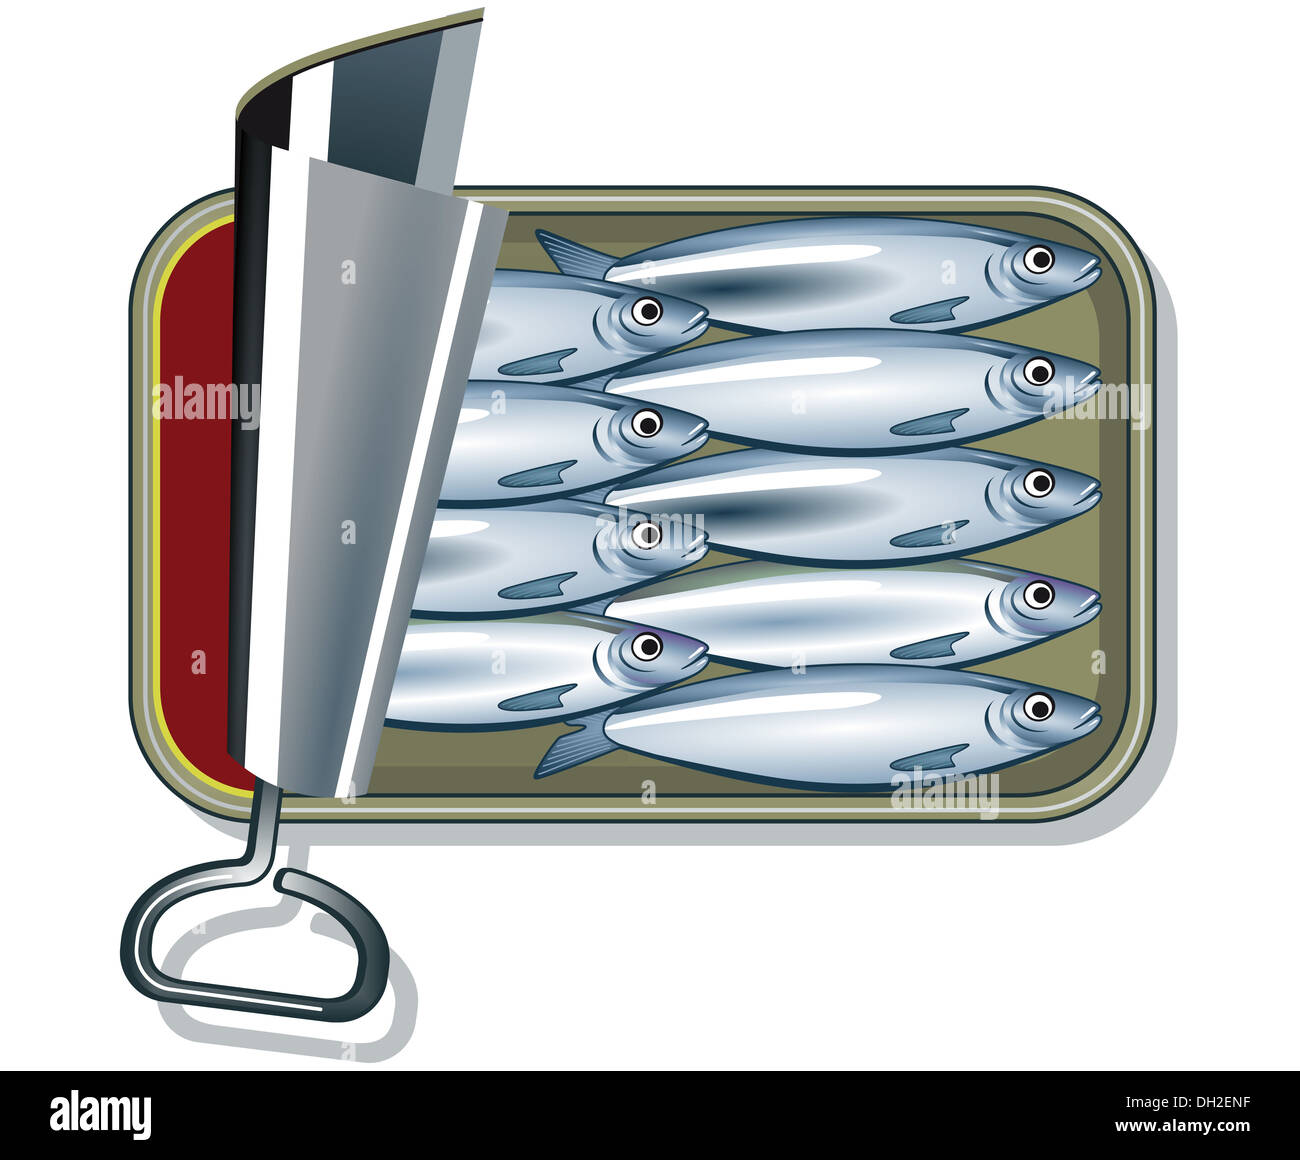 sardines in oil Stock Photo